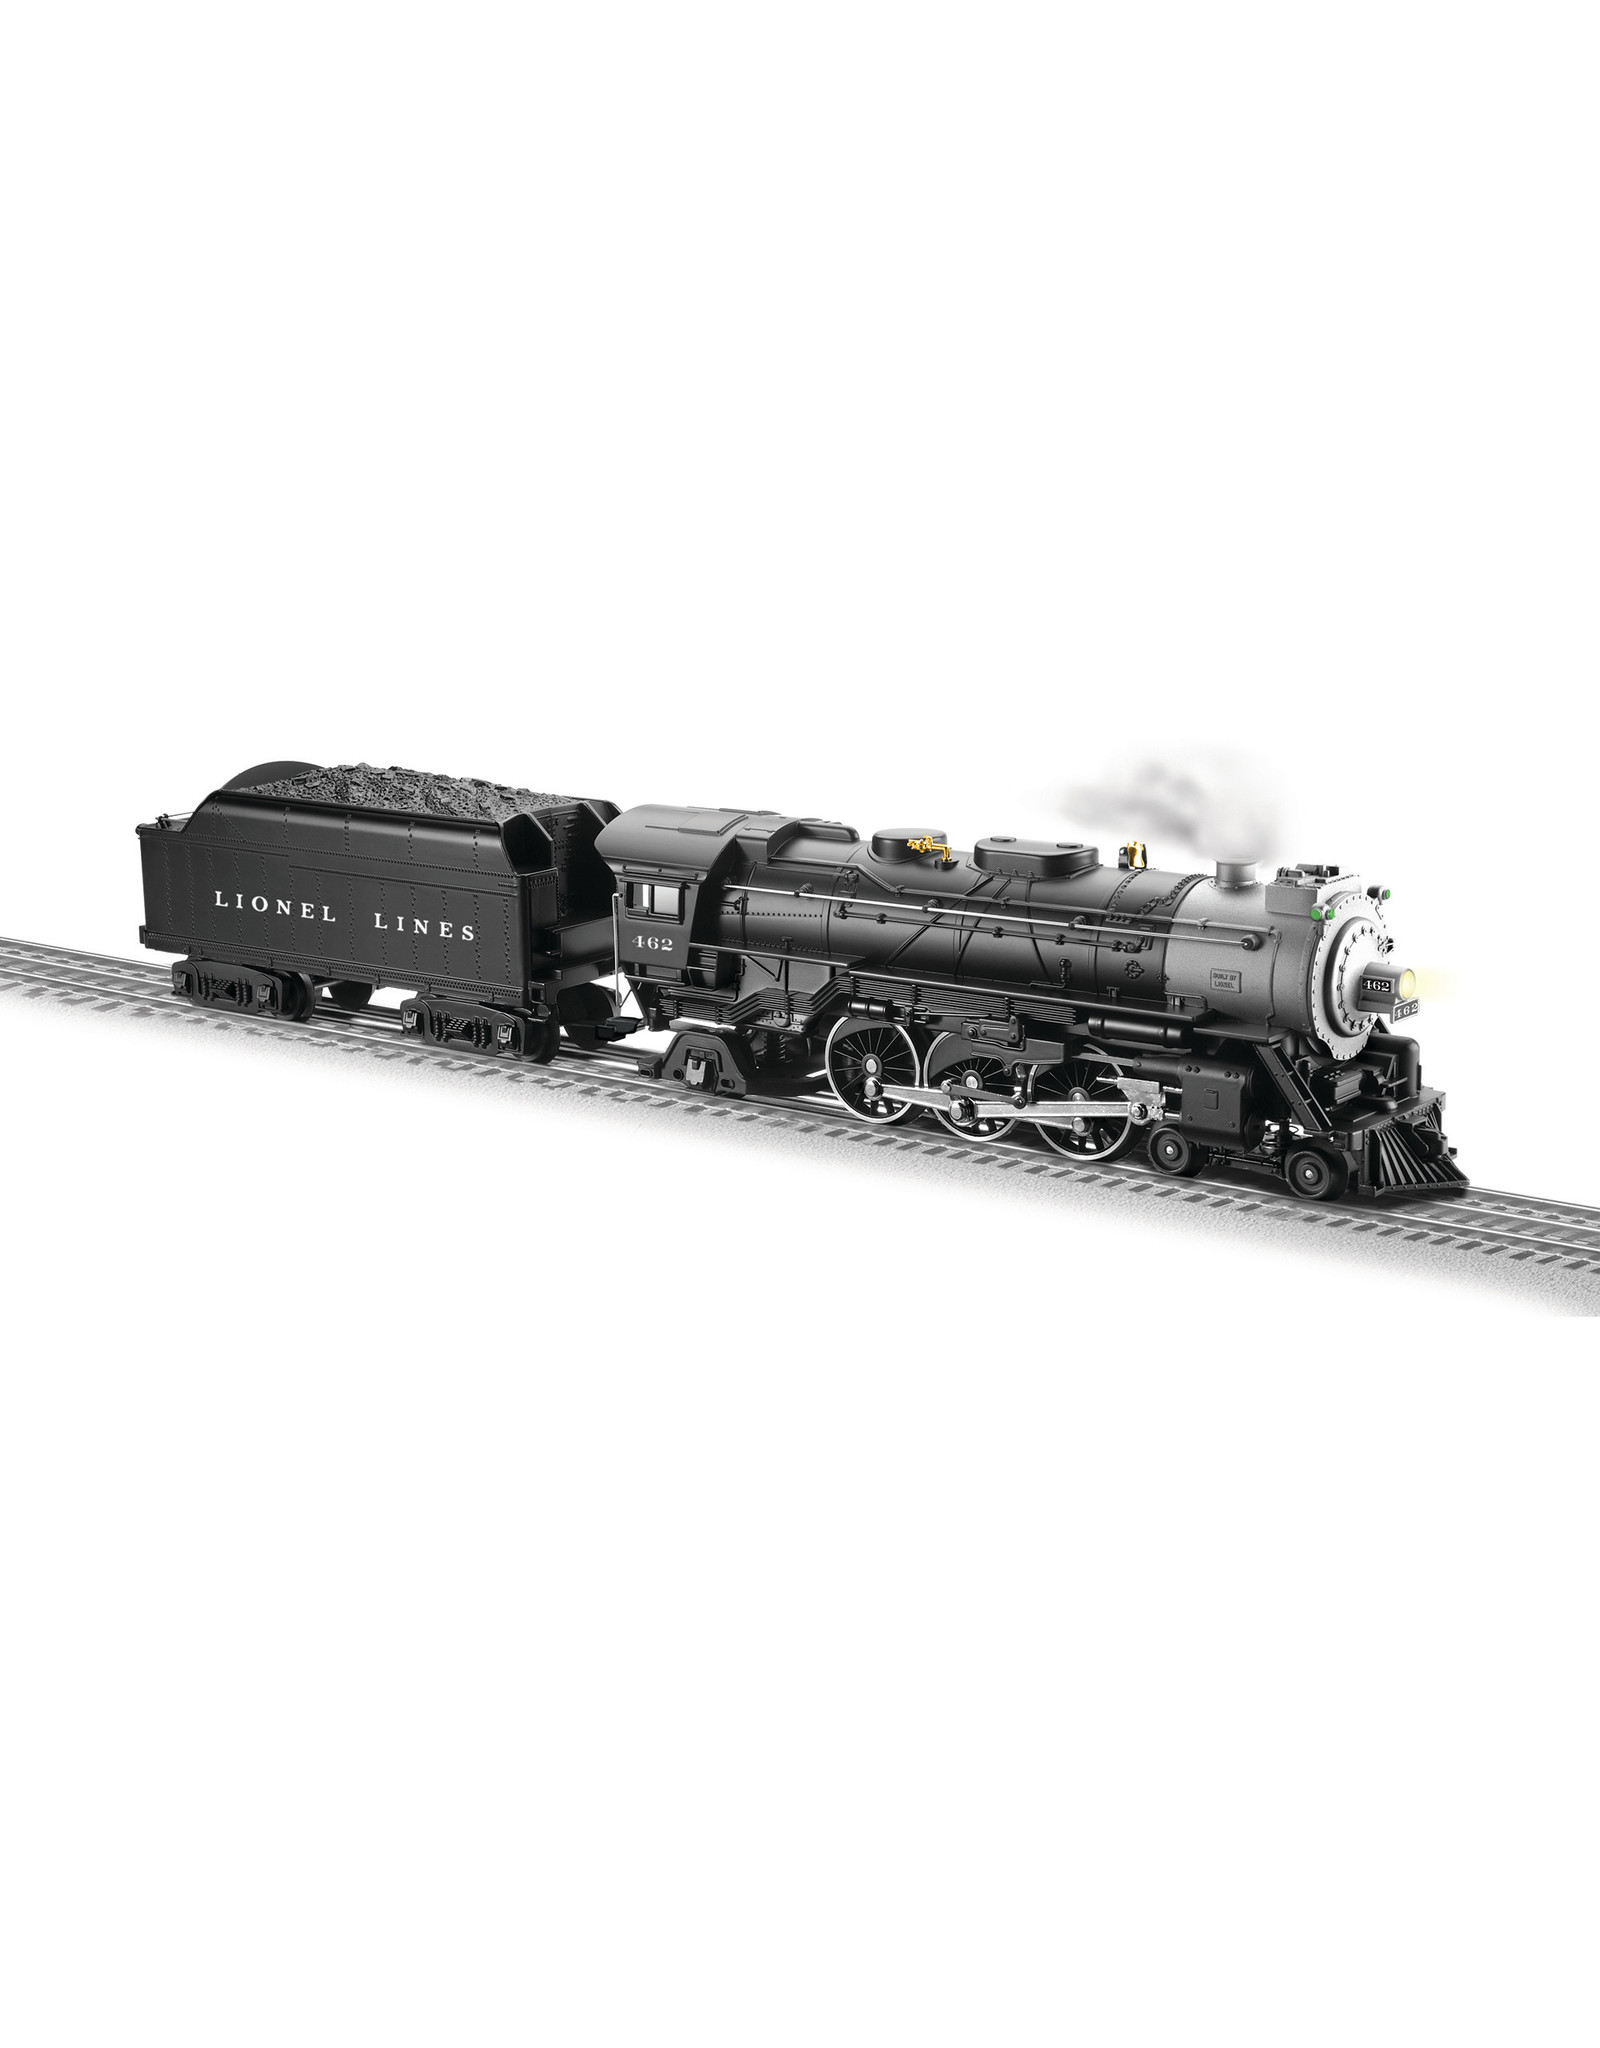 Lionel Used Lionel Lines LionChief™ Plus Pacific Locomotive SKU: 6-82968 #462